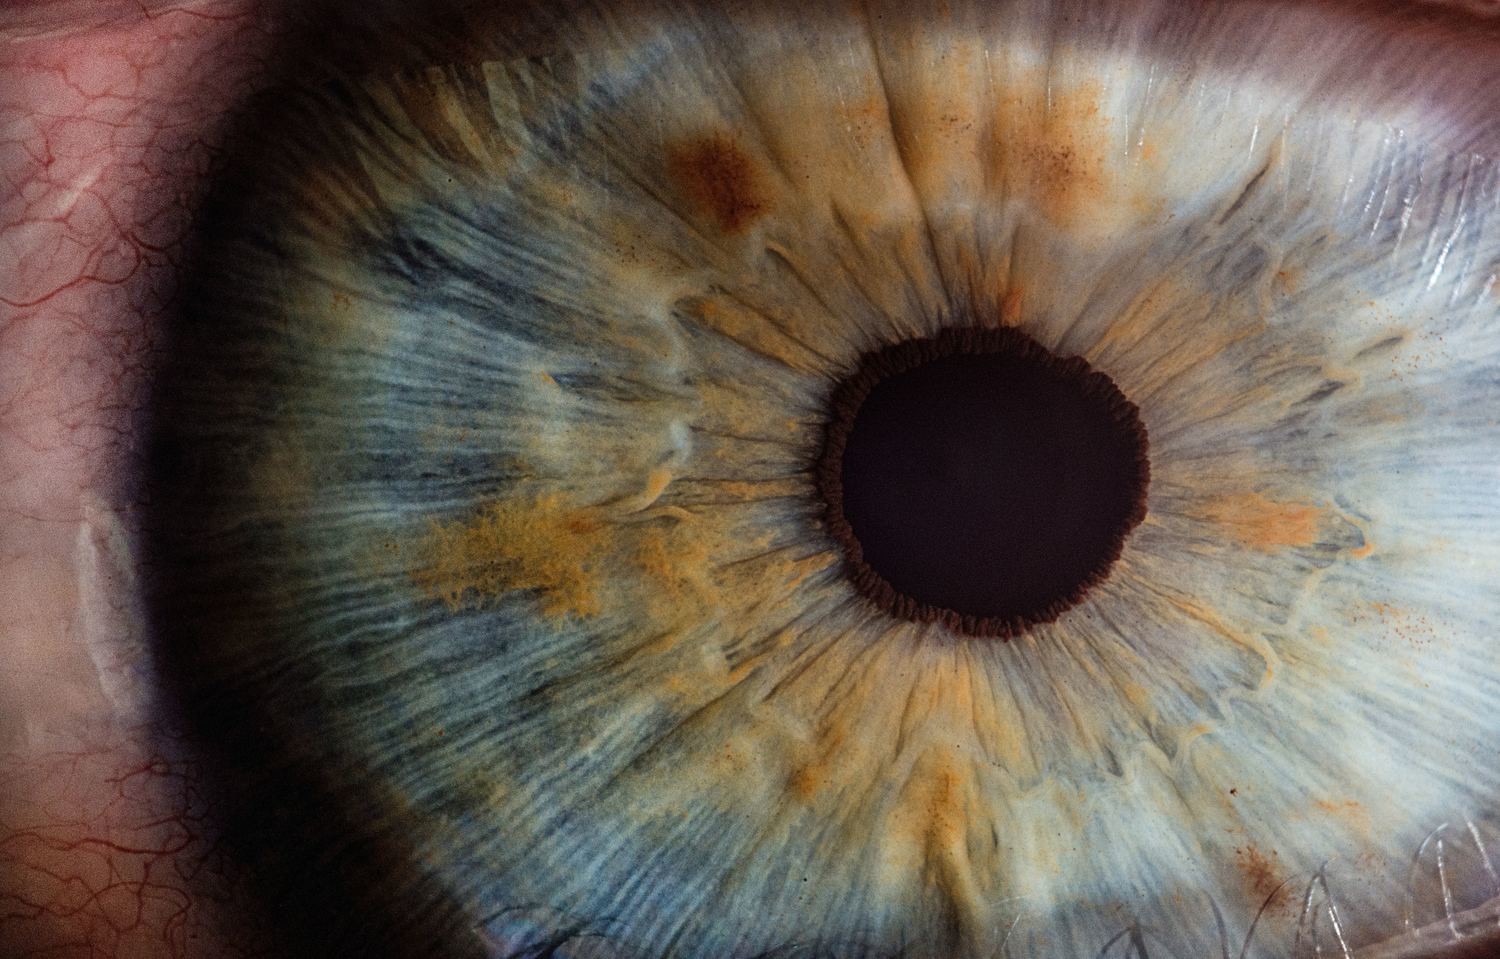 The Human Eye - Diseases & Disorders - CPD